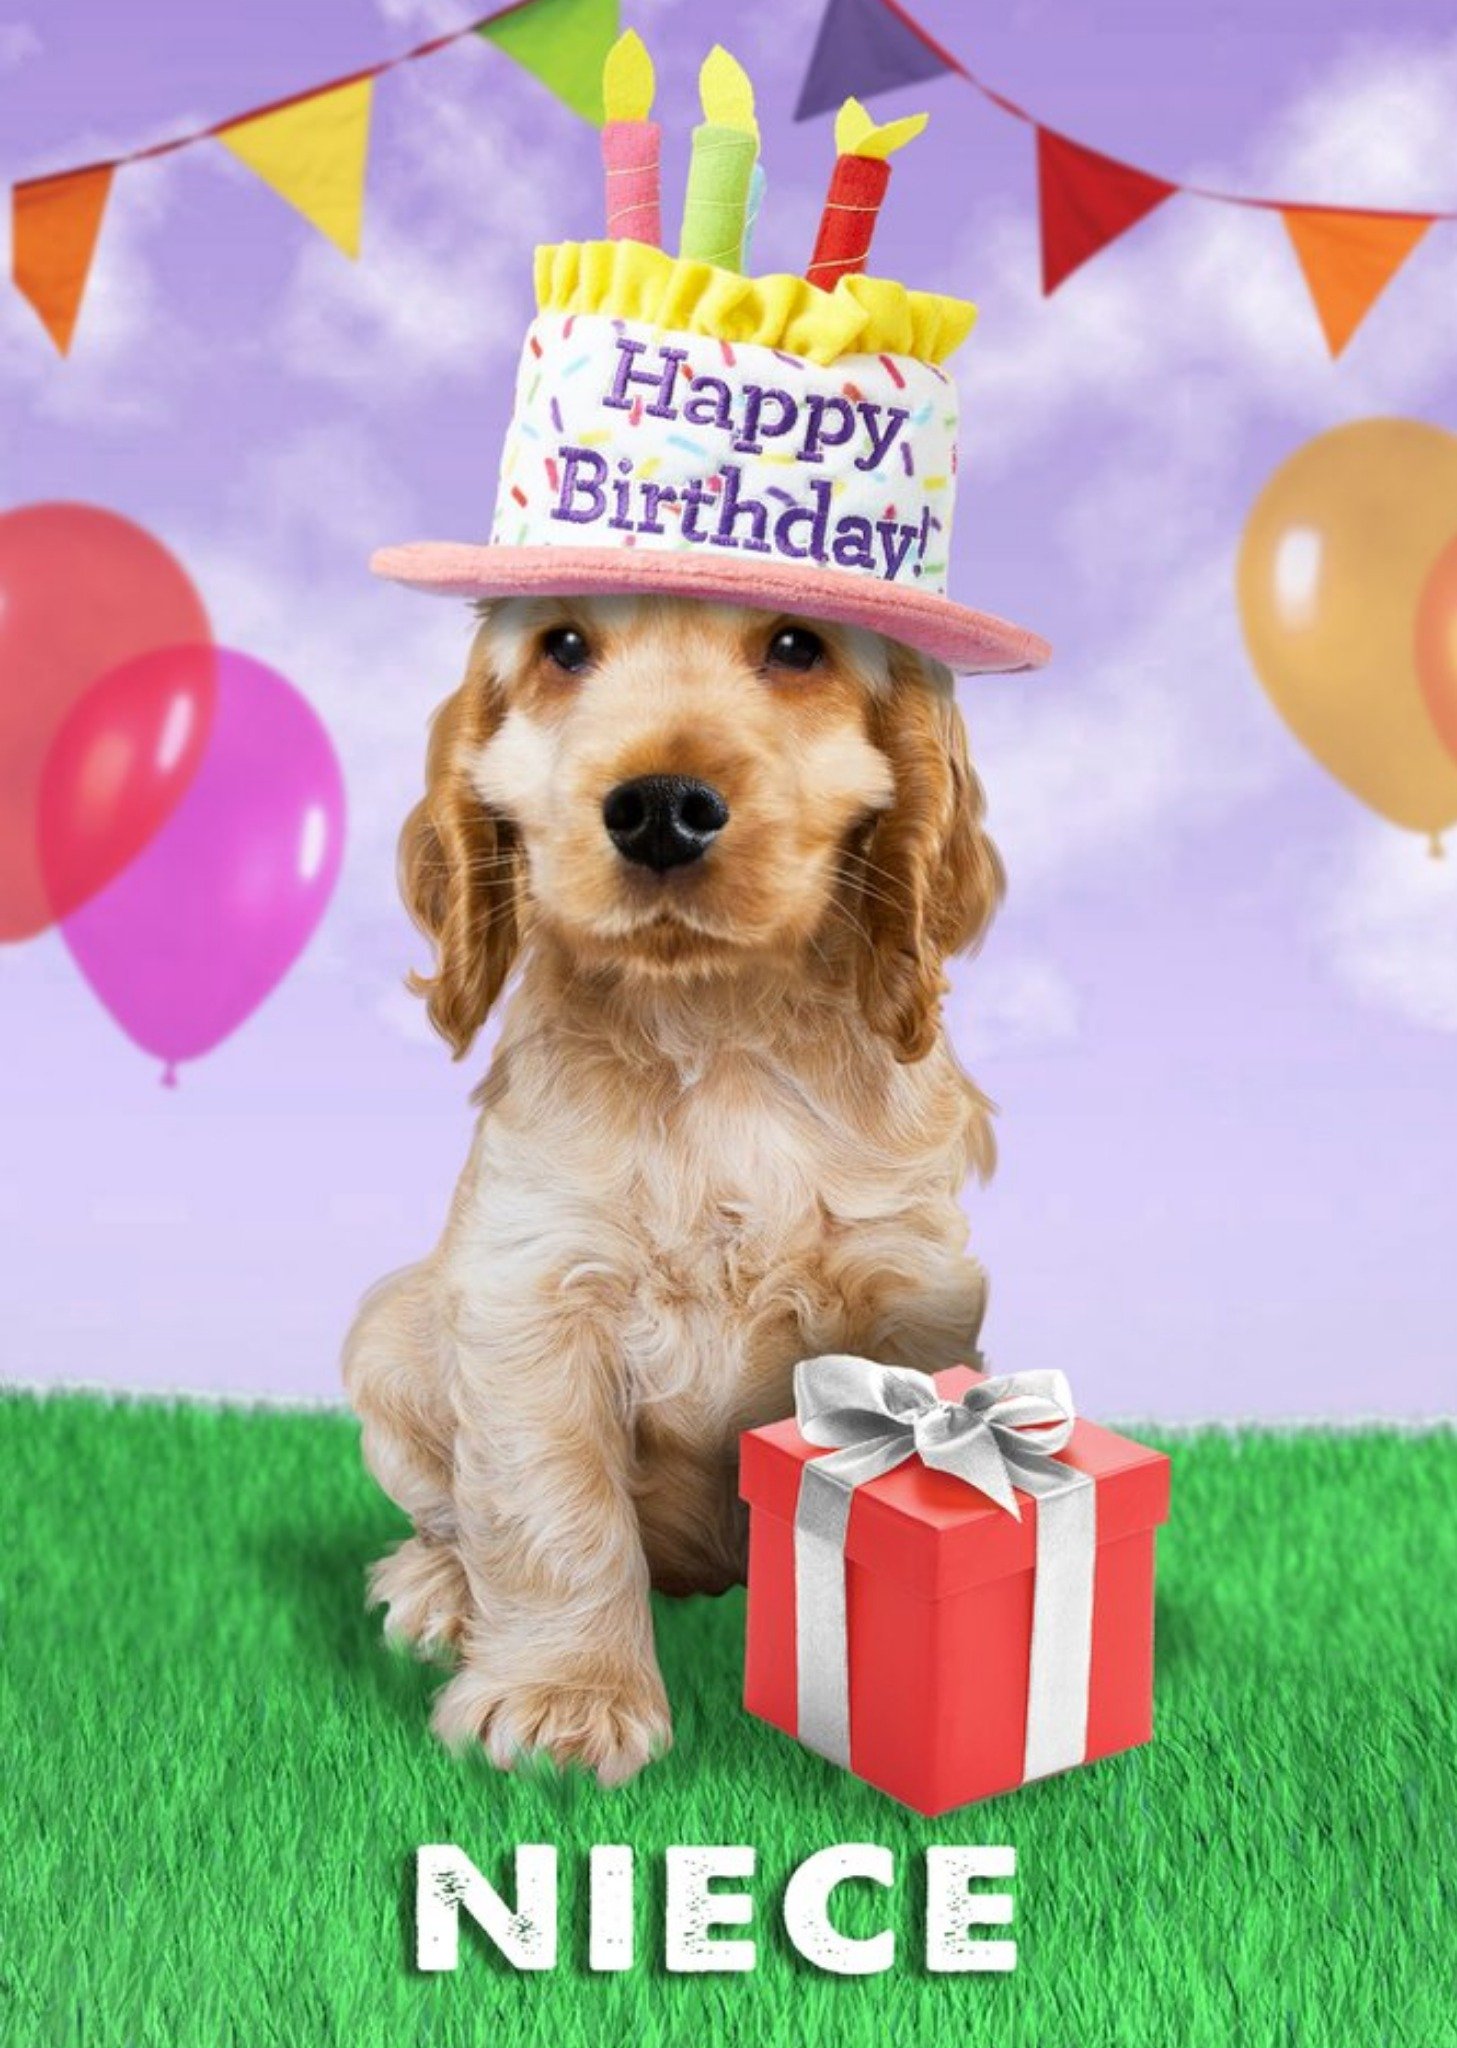 Moonpig Cute Dog Wearing Birthday Cake Hat Birthday Card, Large